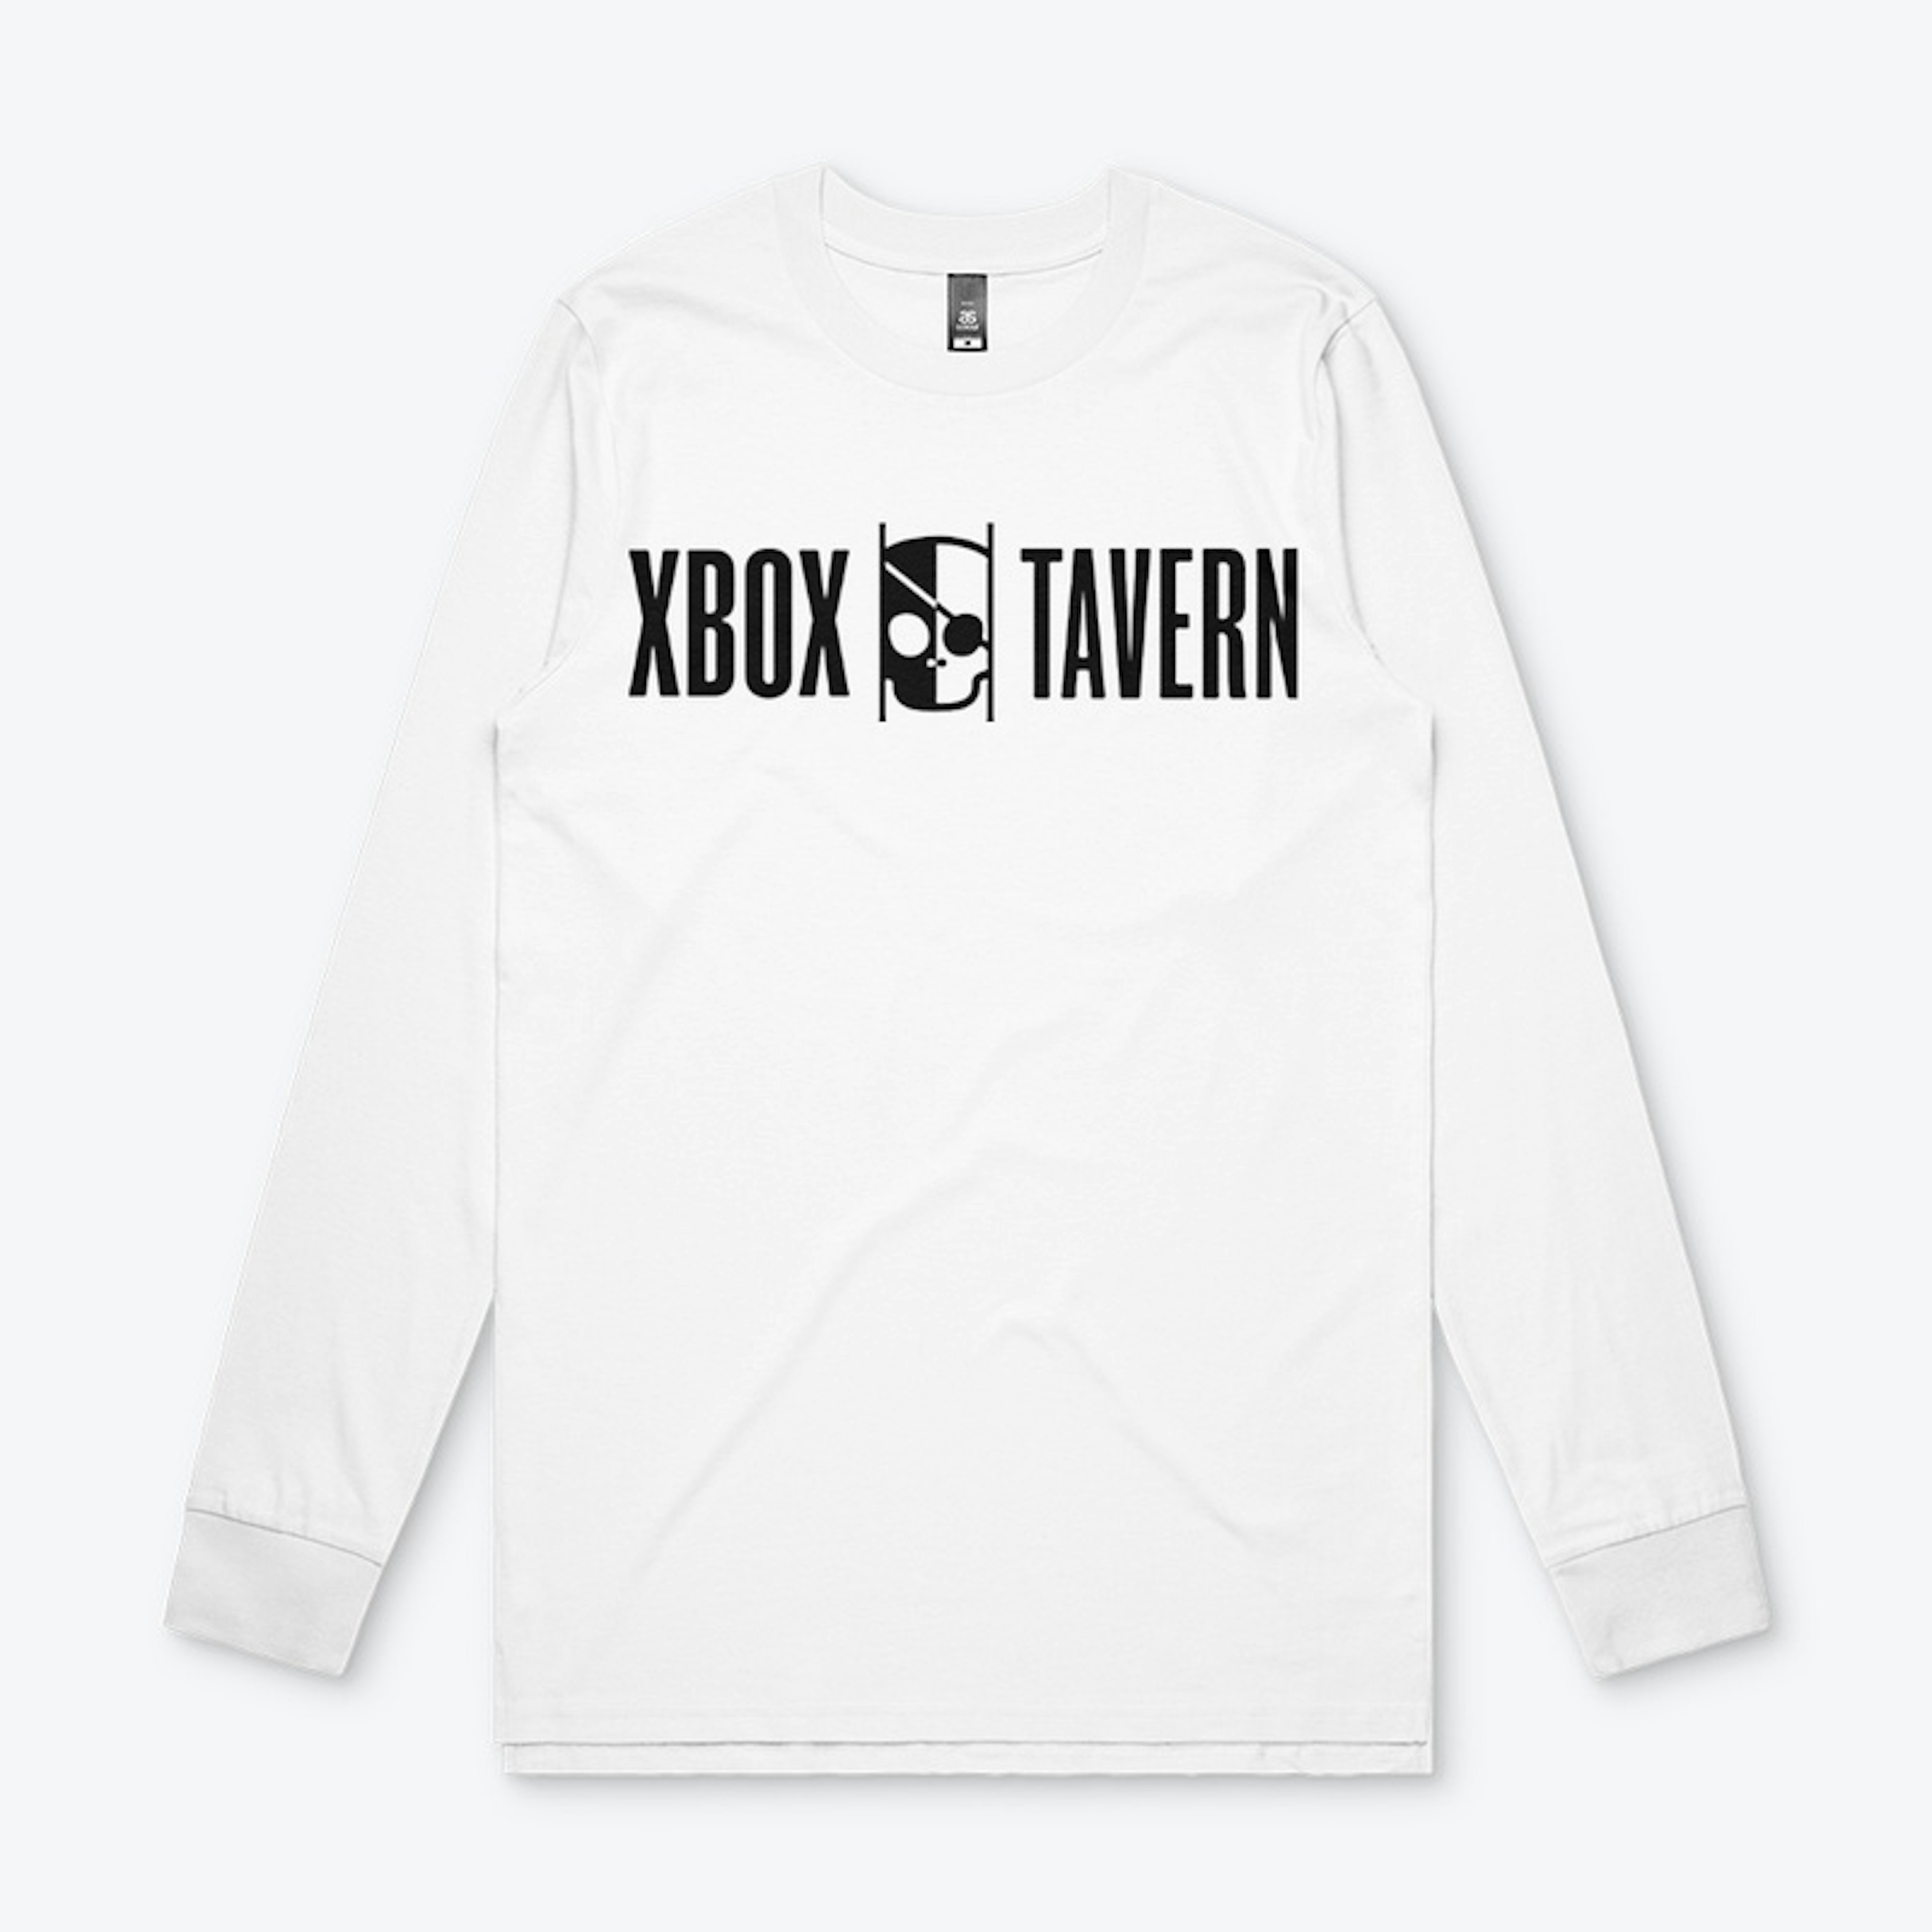 Xbox Tavern Black Logo